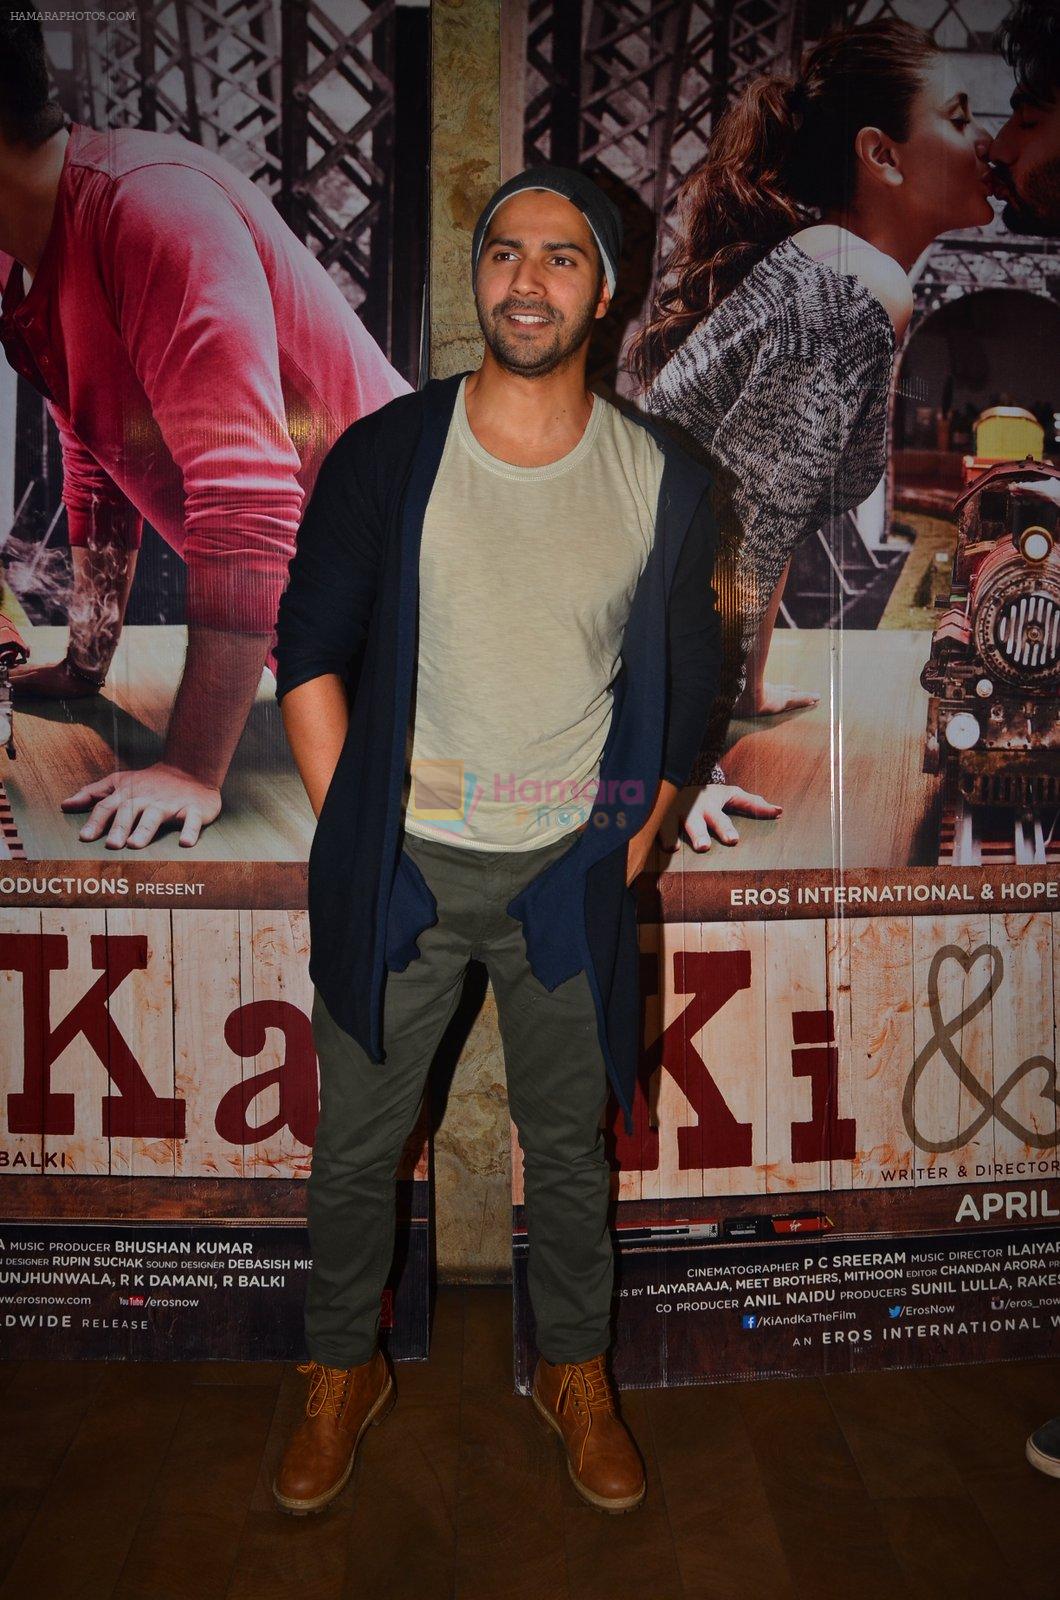 Varun Dhawan at ki and ka screening in Mumbai on 26th March 2016